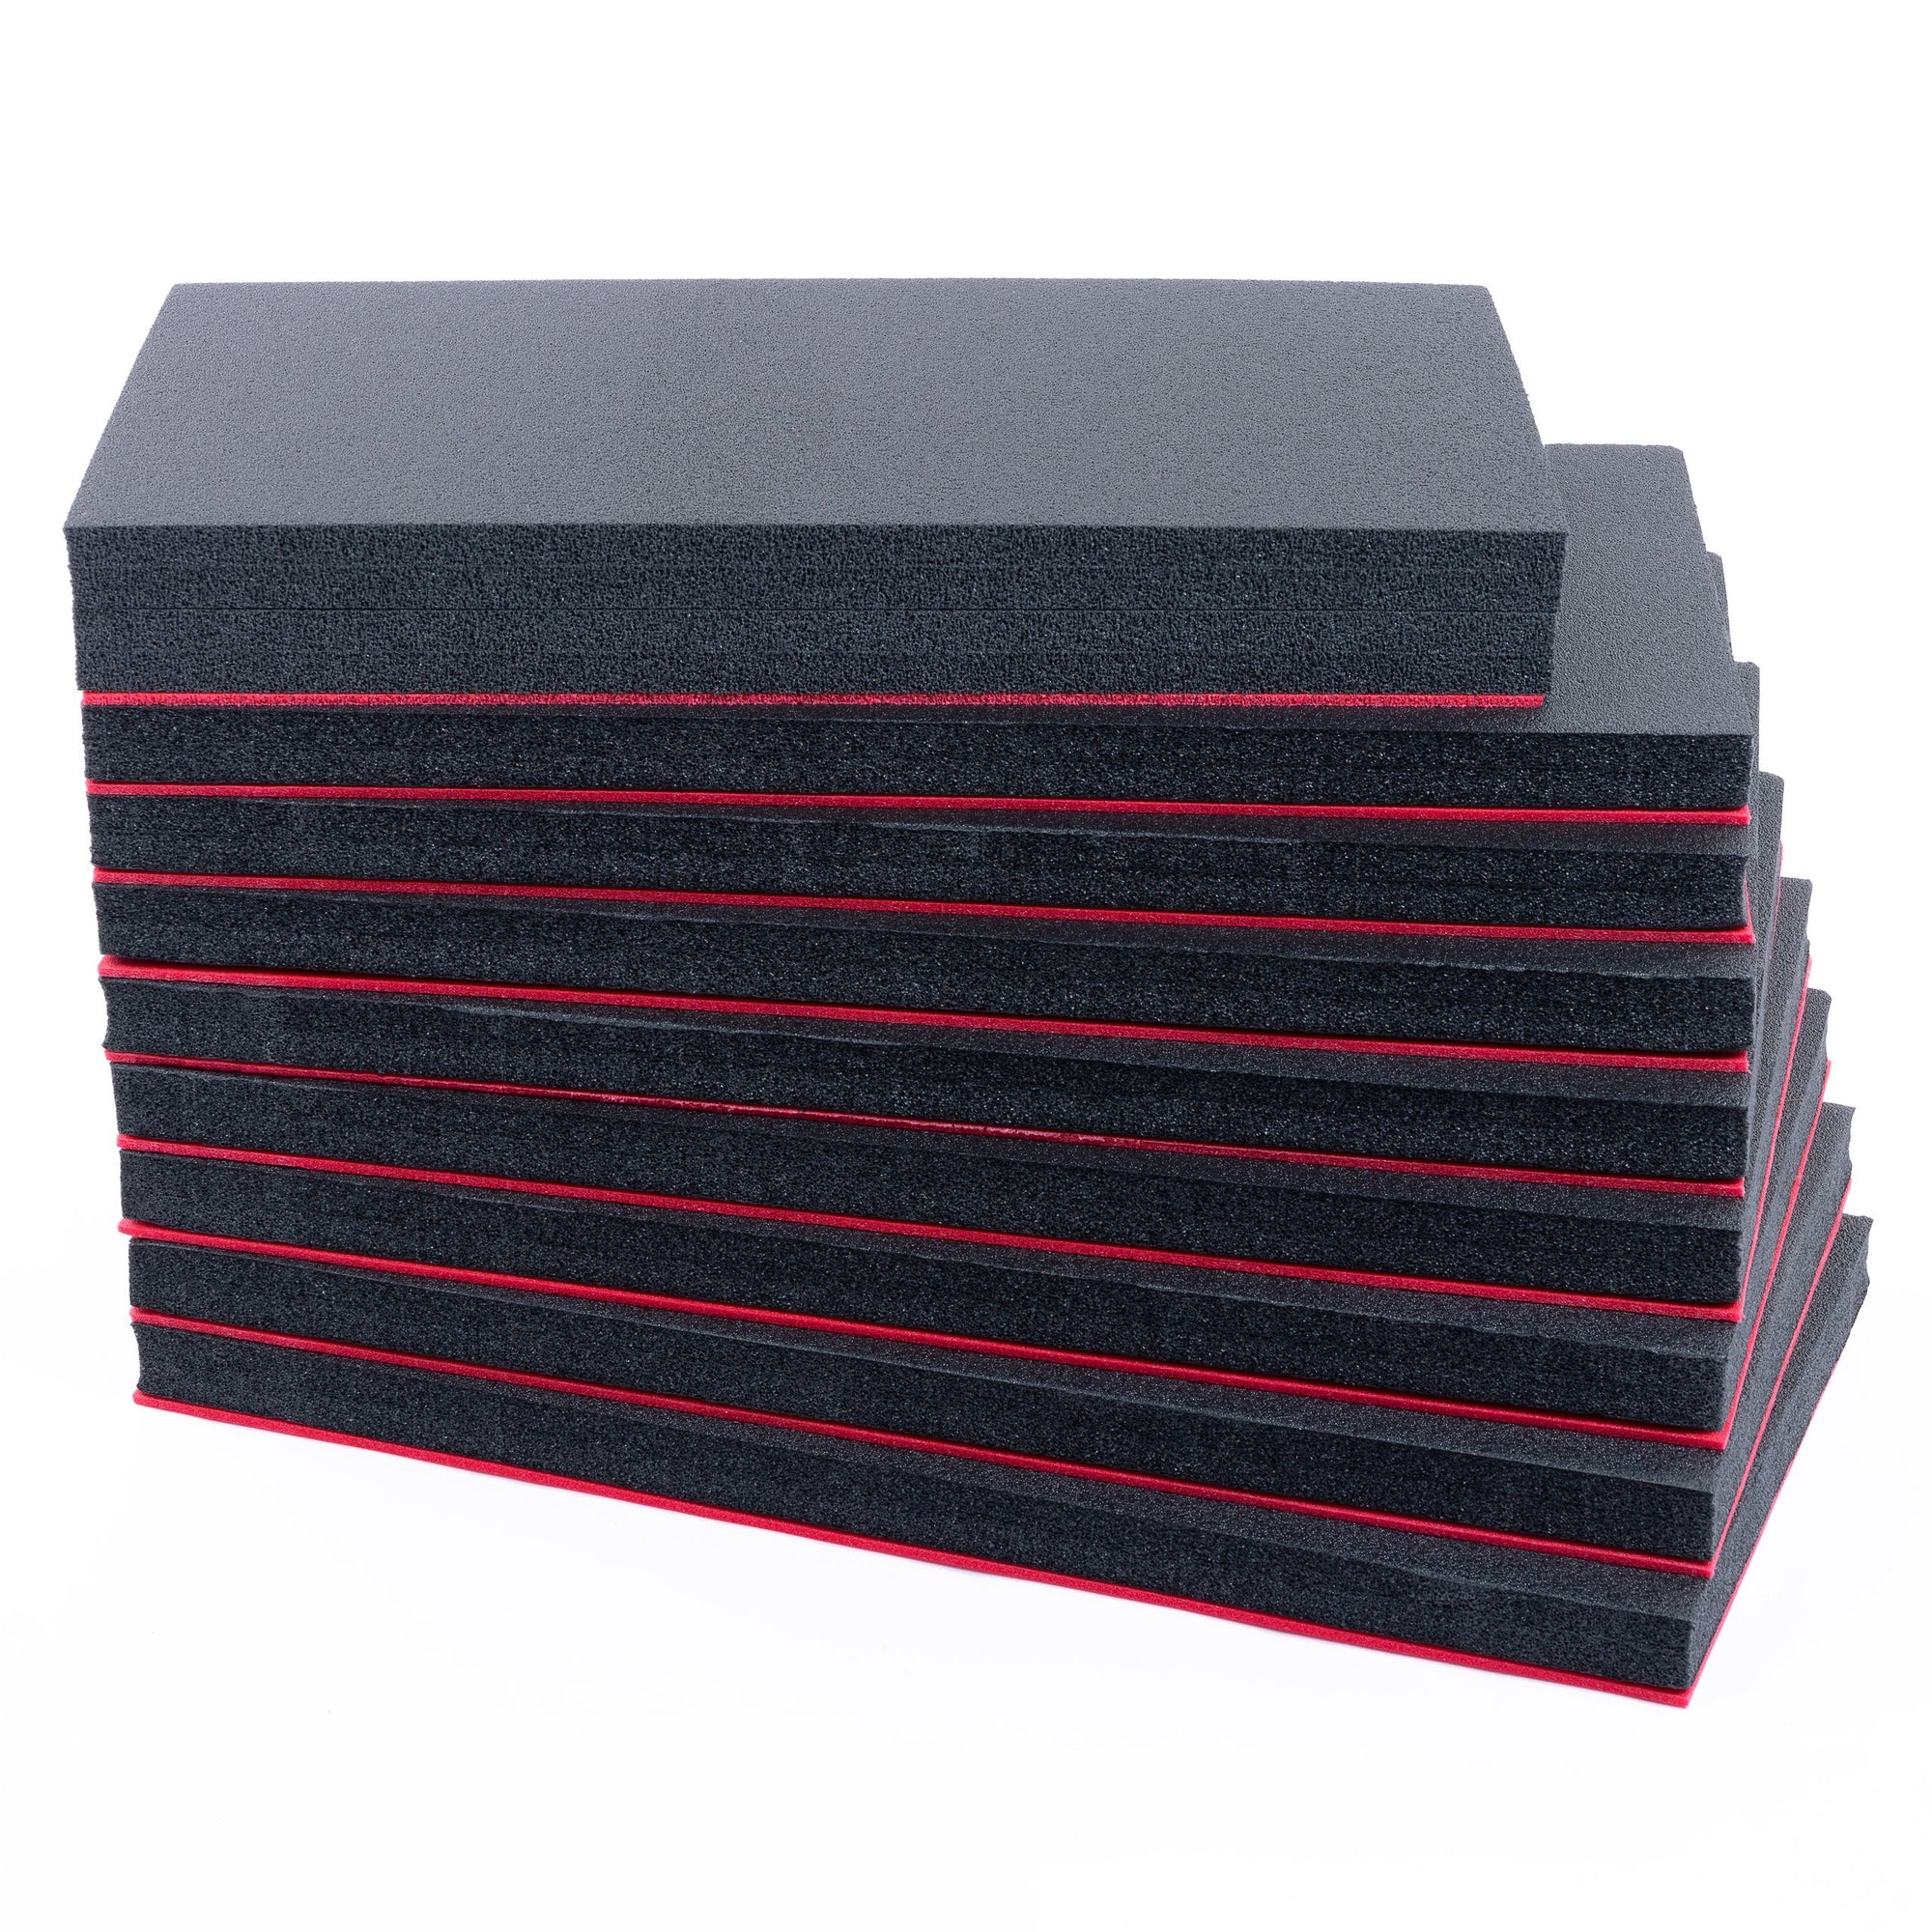 Foama N945 Case for 6 Filters with Foam Insert (Black/Red)